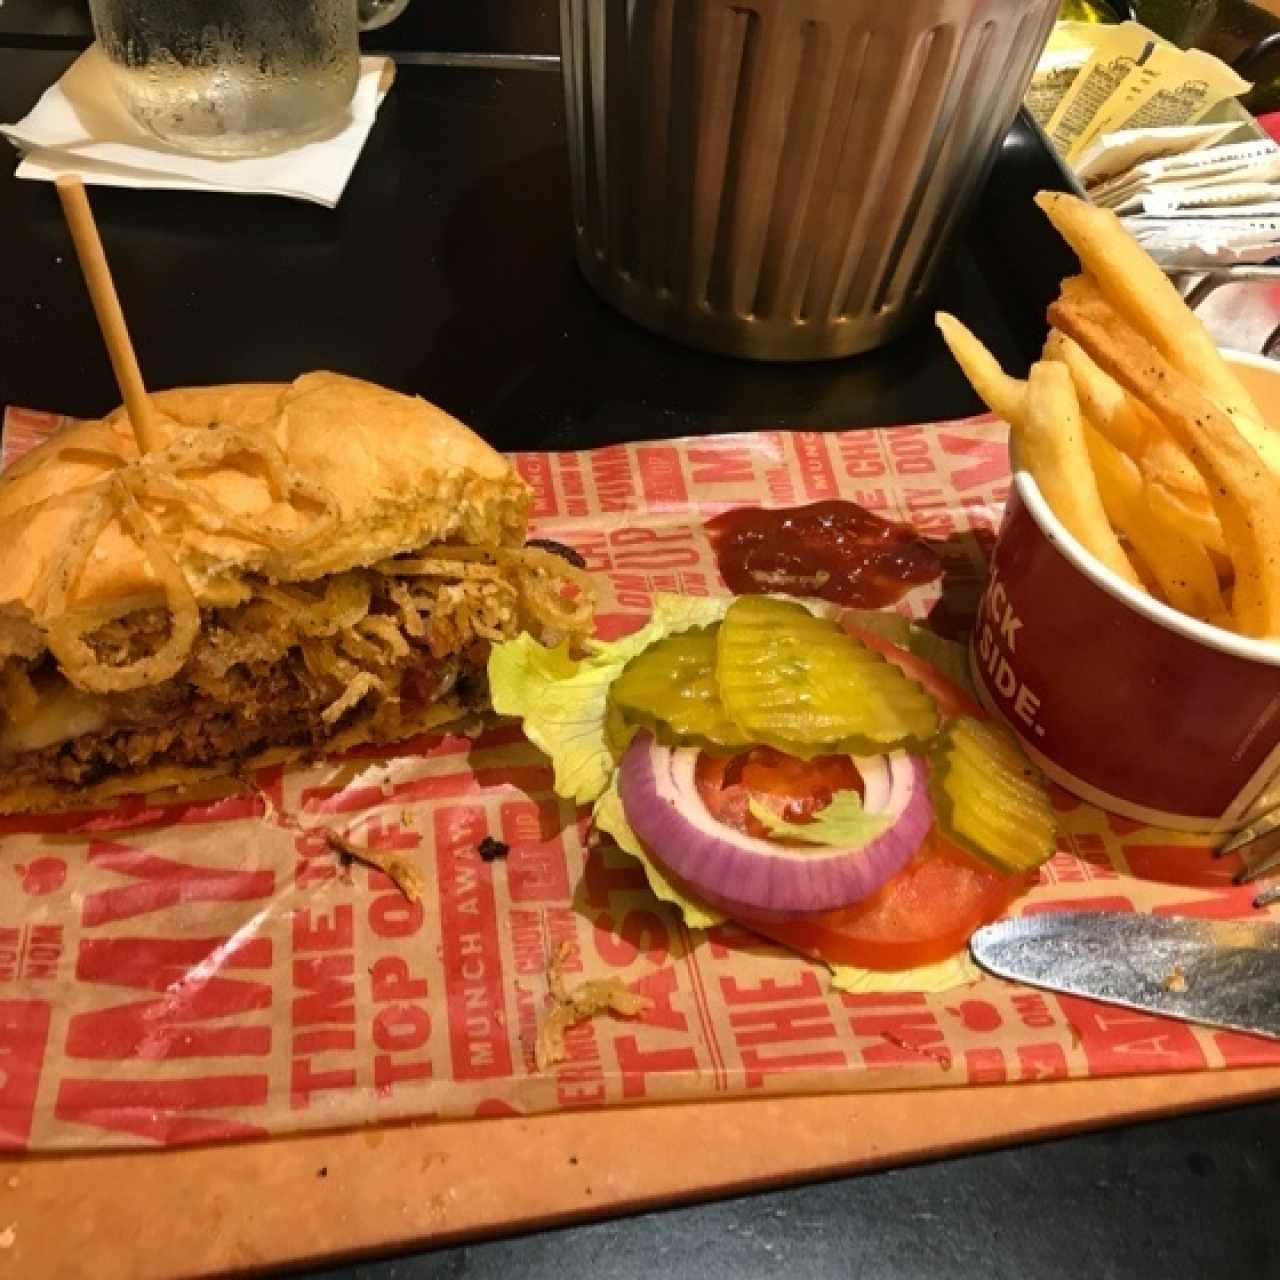 Cowboy Burger